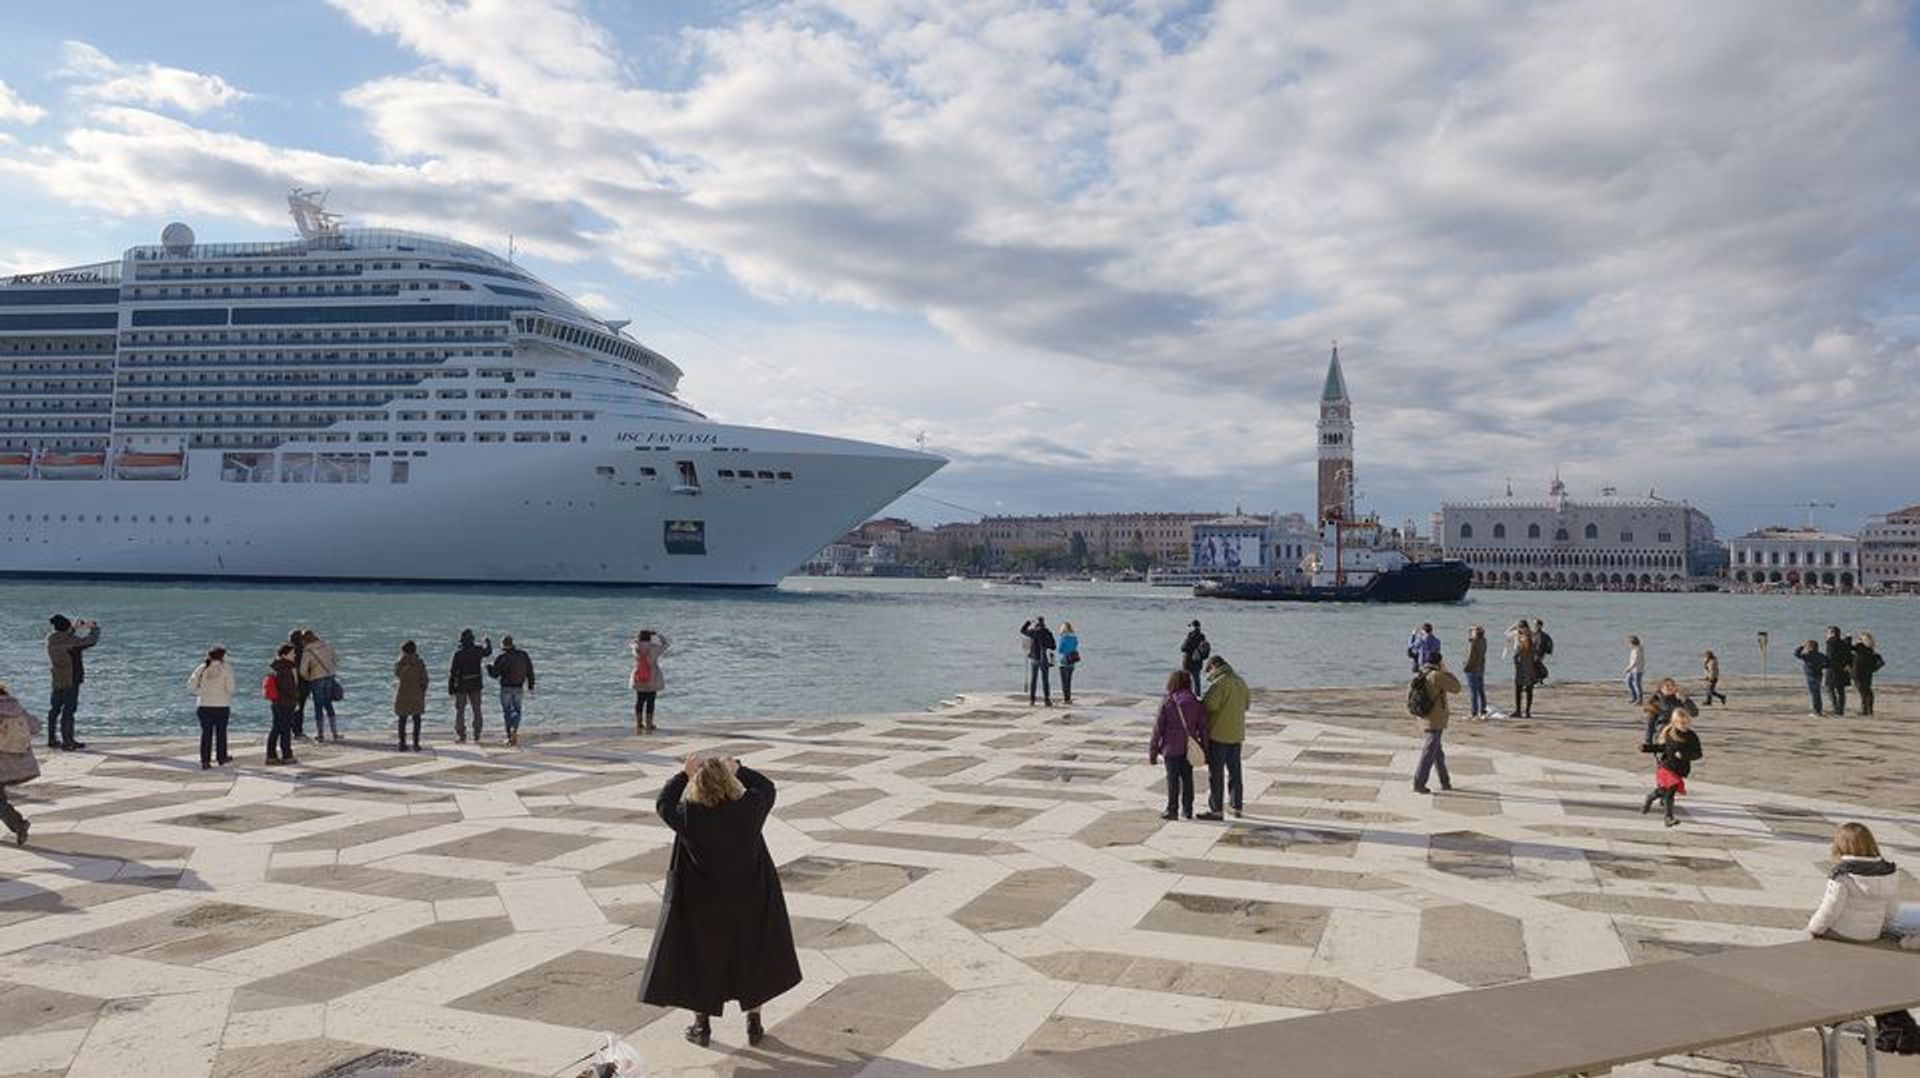 The cruise ship MSC Fantasia on the "Bacino San Marco" in Venice © Wolfgang Moroder